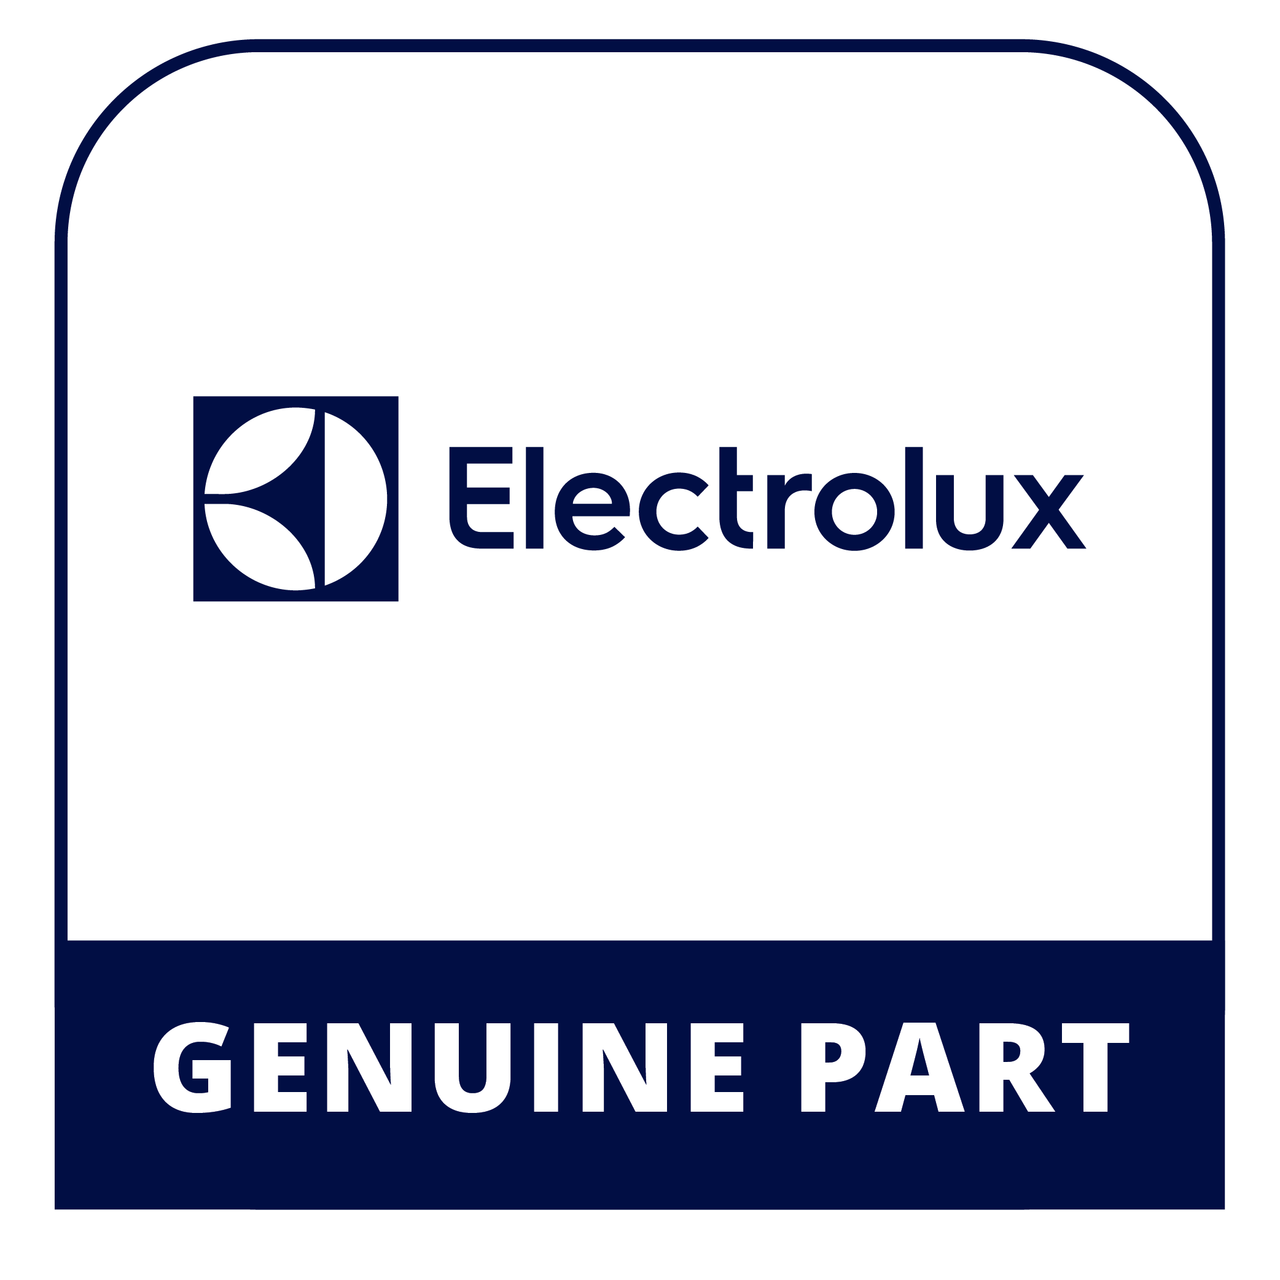 Frigidaire - Electrolux 5304440833 Panel - Genuine Electrolux Part